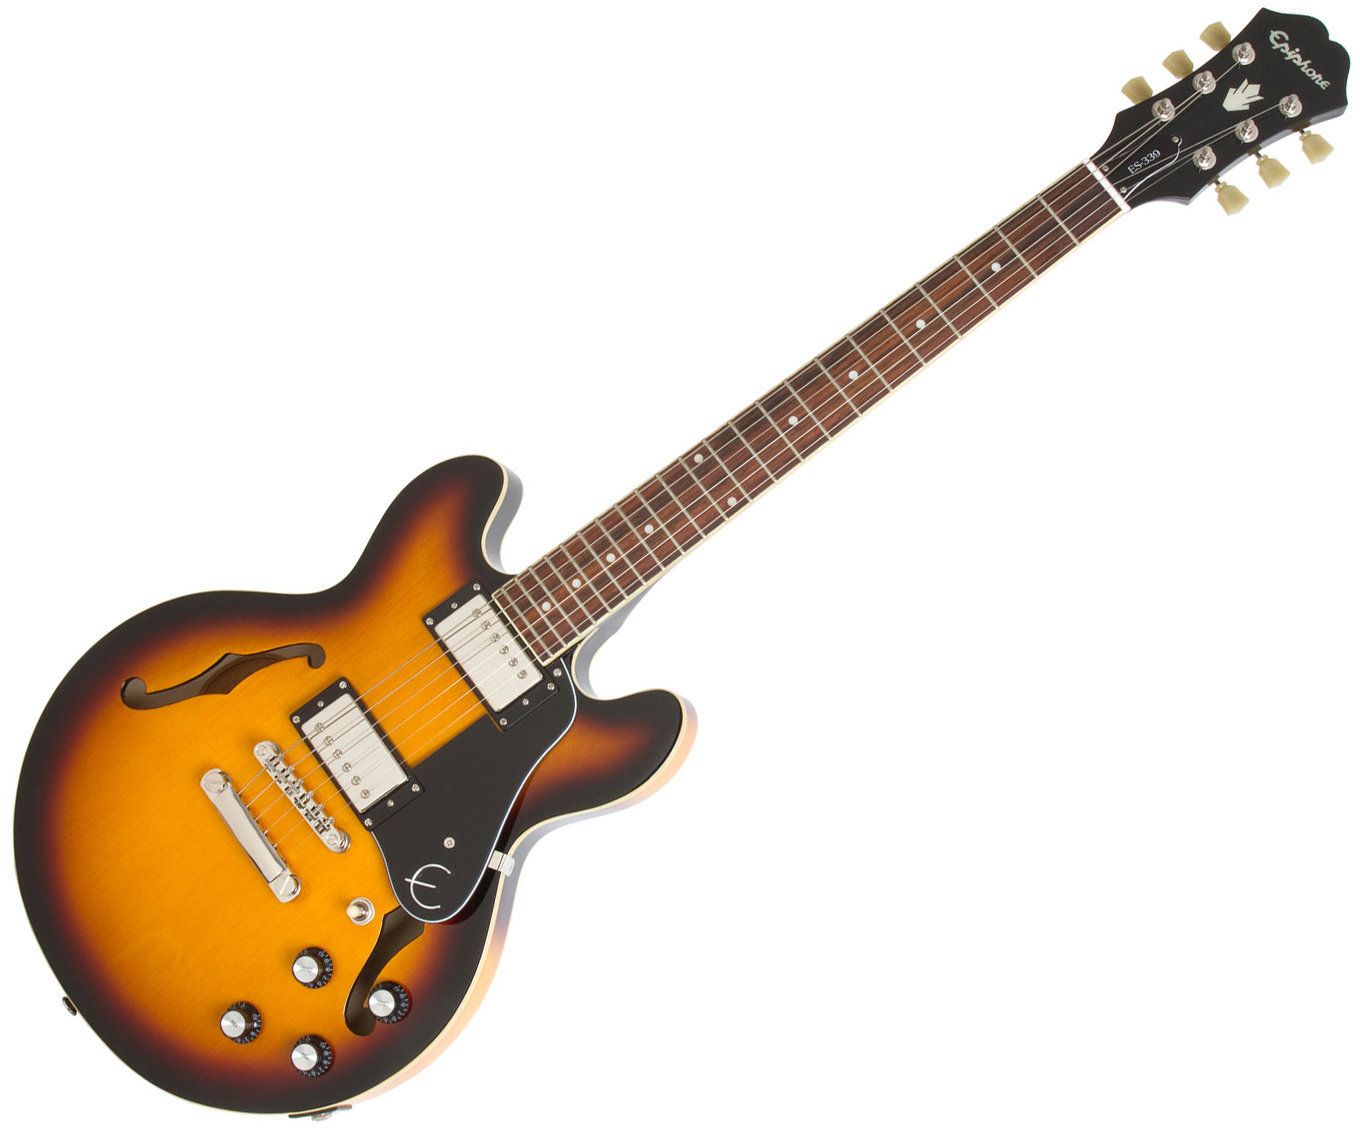 Semiakustická kytara Epiphone Ultra-339 Vintage Sunburst